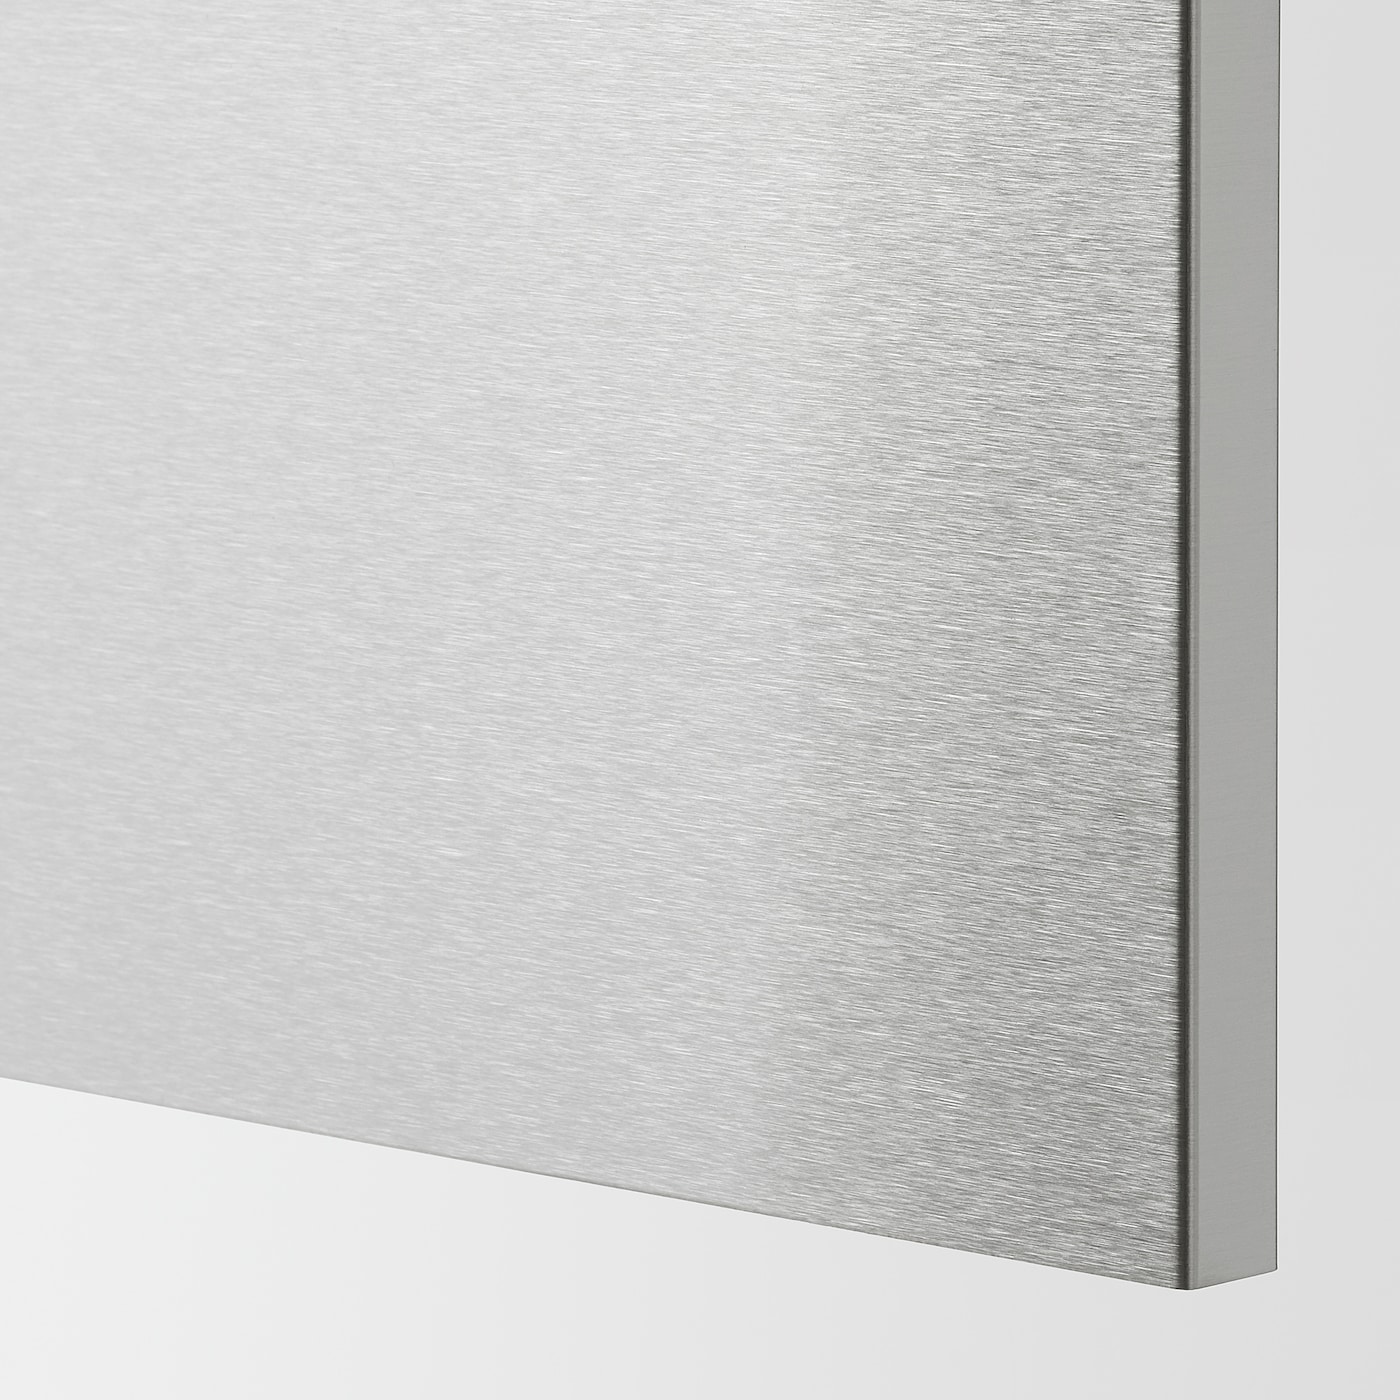 VÅRSTA drawer front stainless steel - IKEA